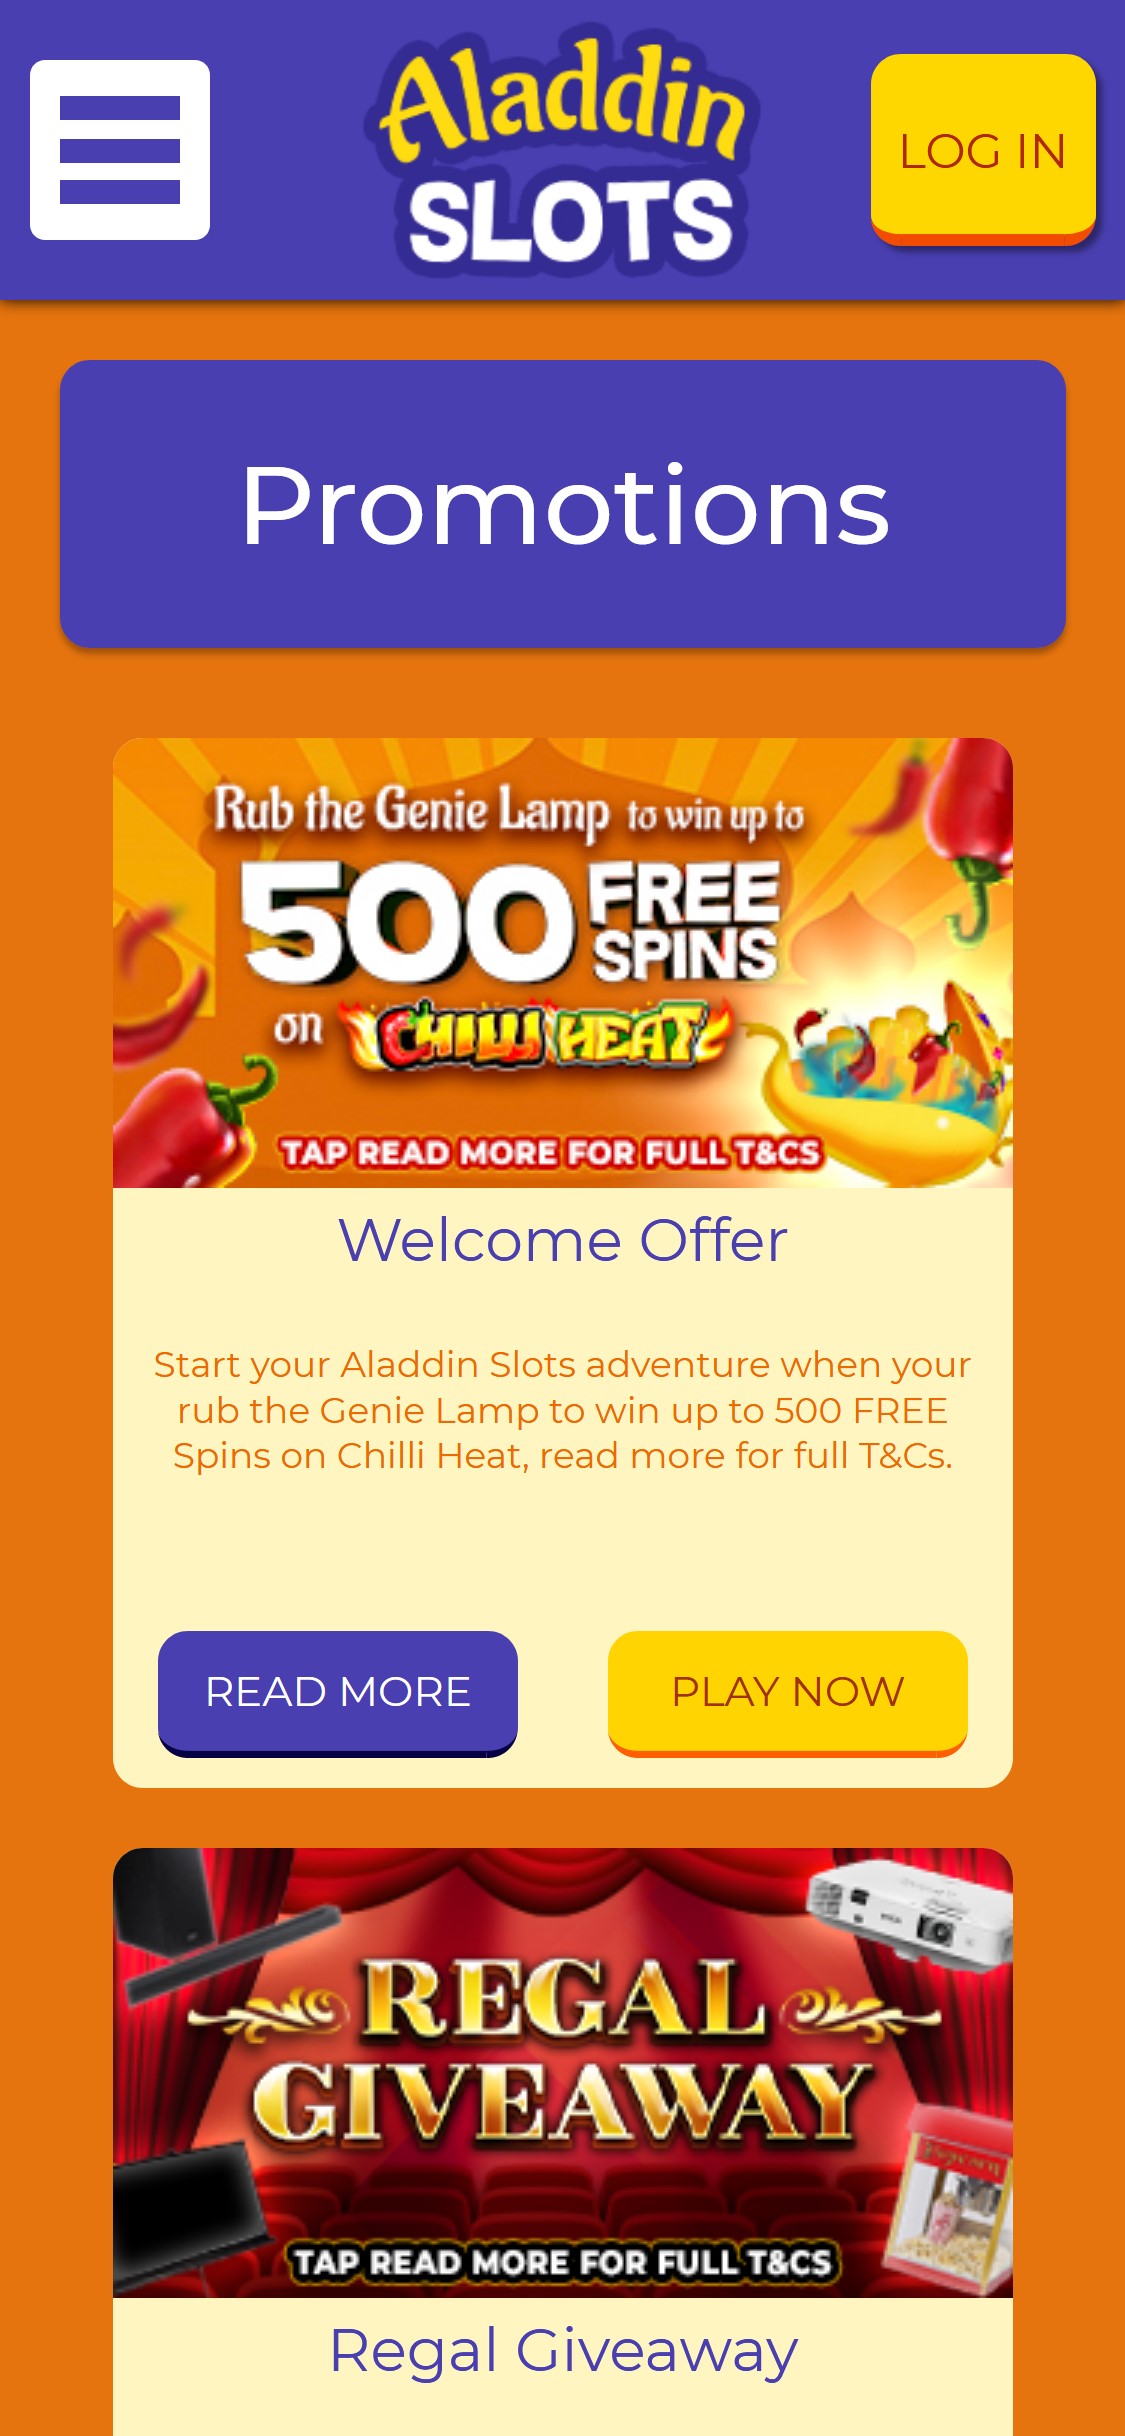 Aladdin Slots Casino Mobile No Deposit Bonus Review